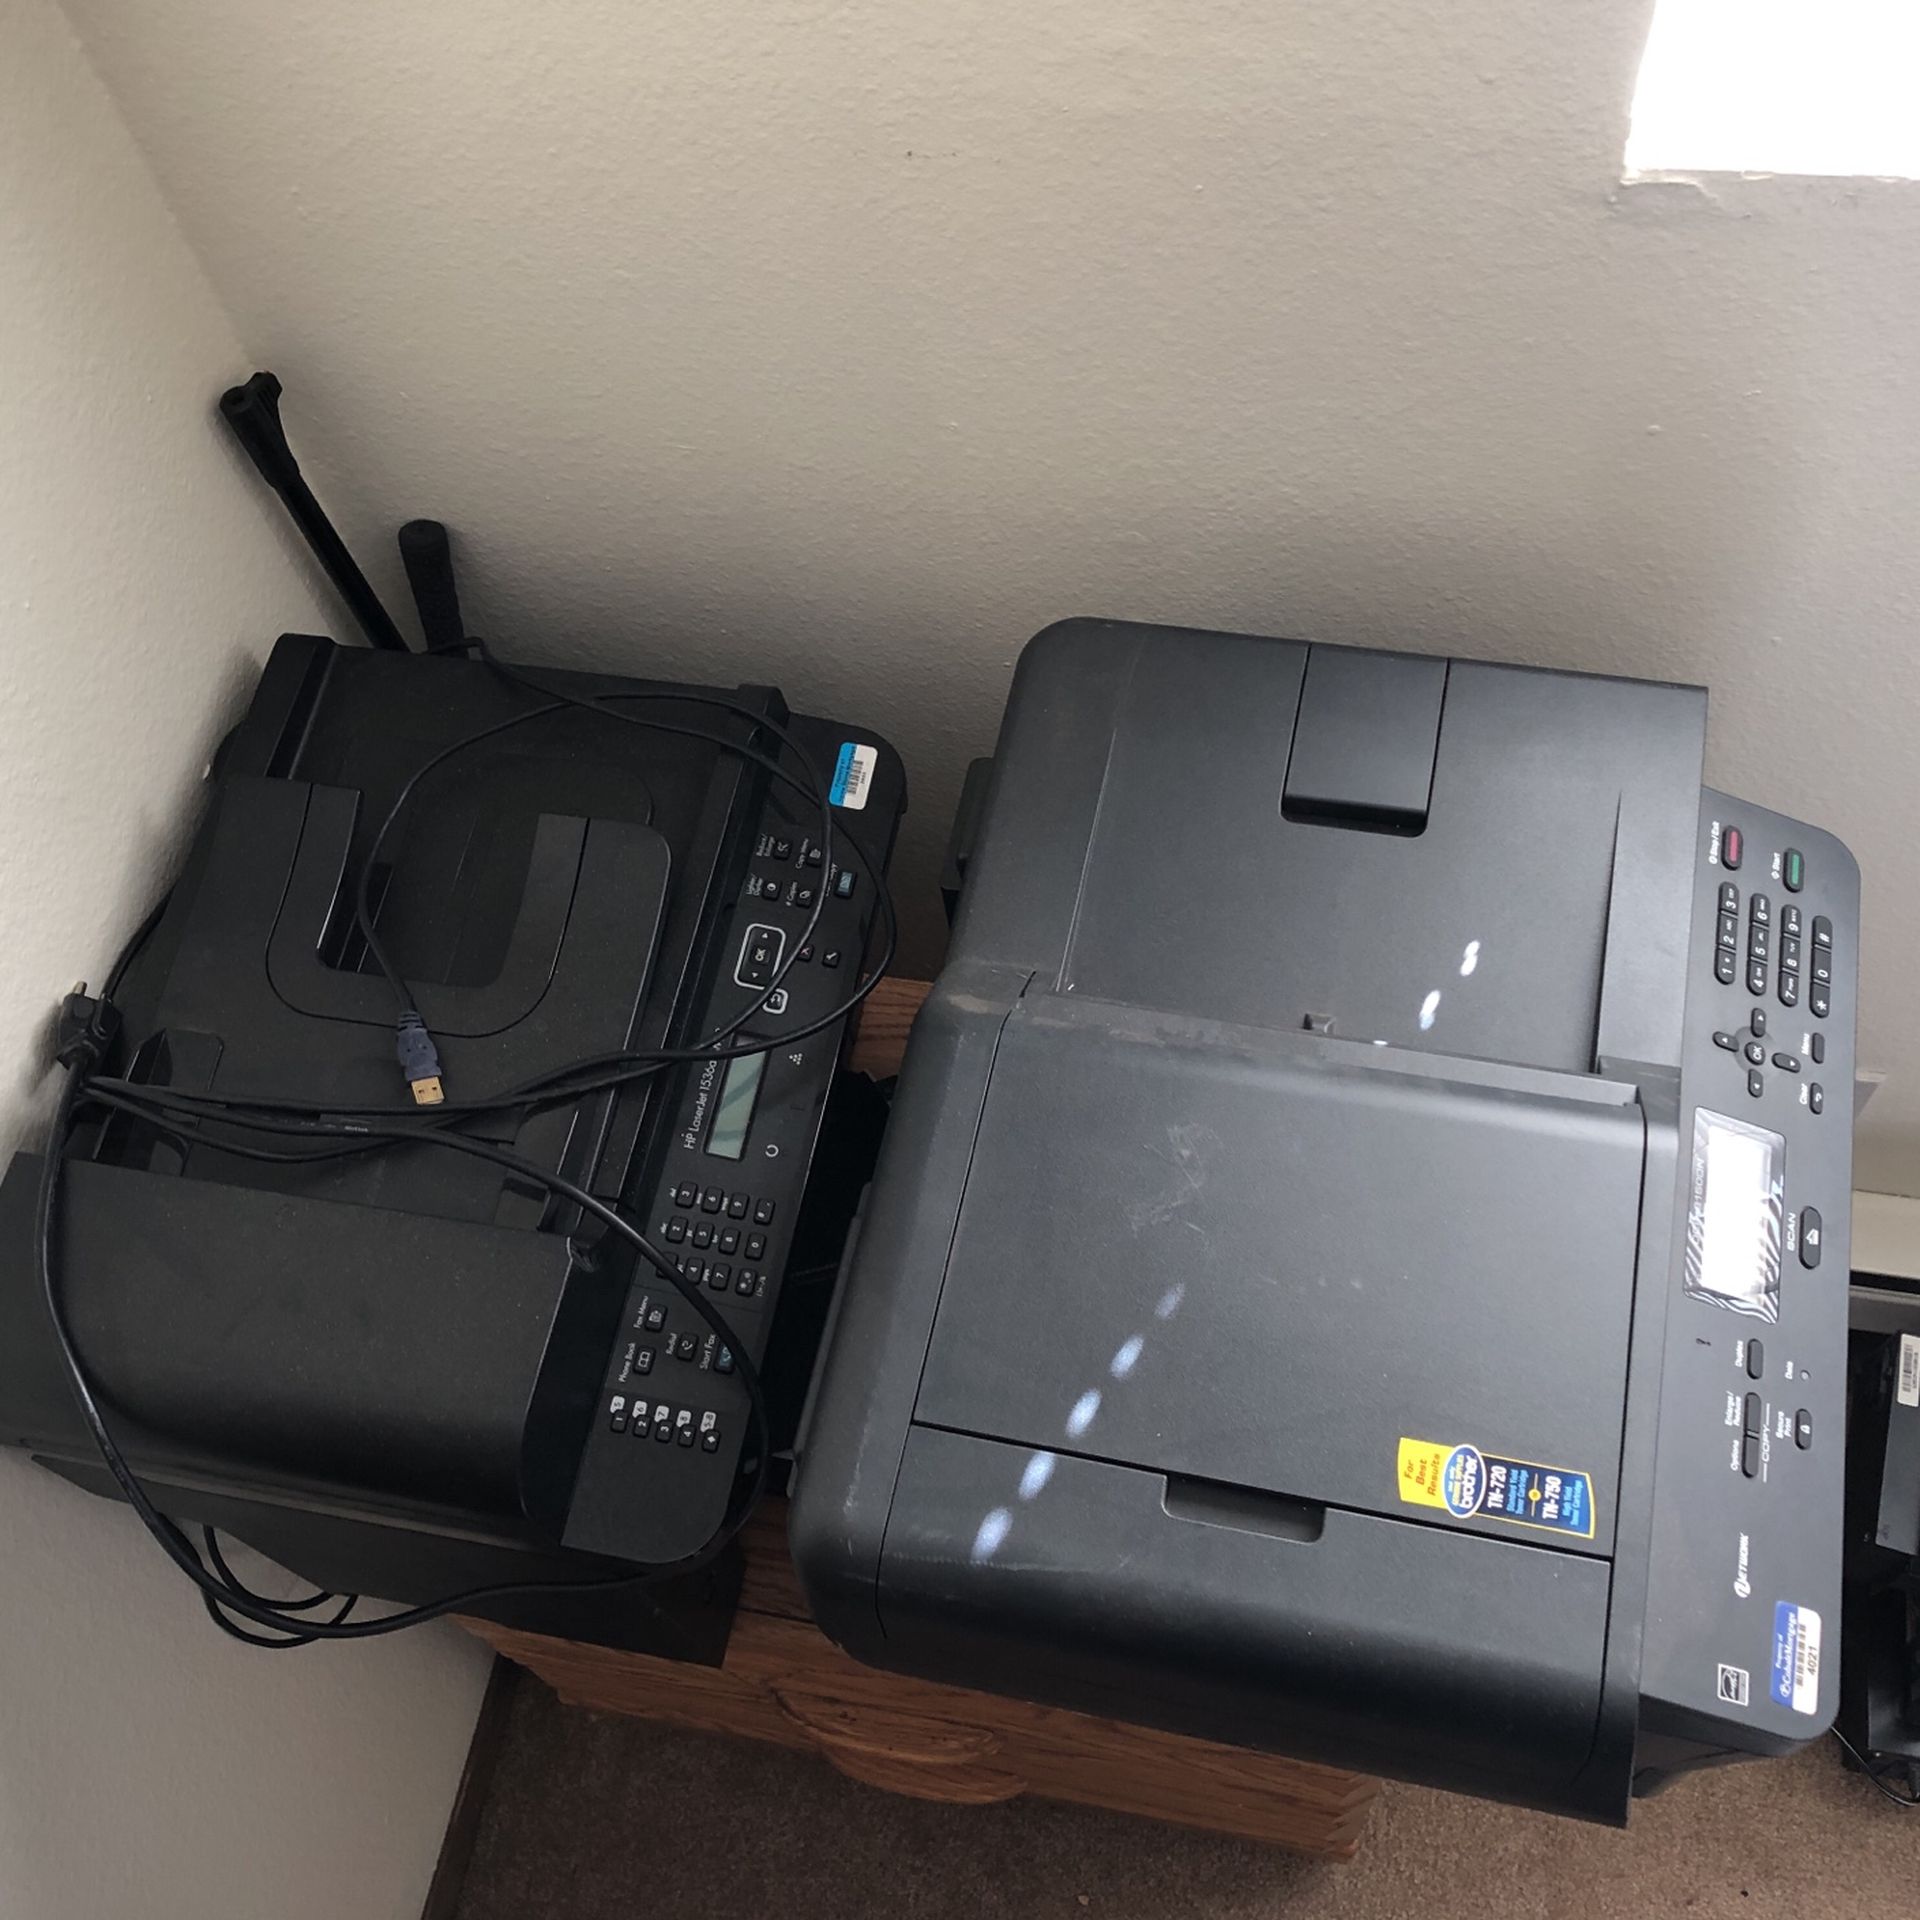 2 Printers That Work, 20$